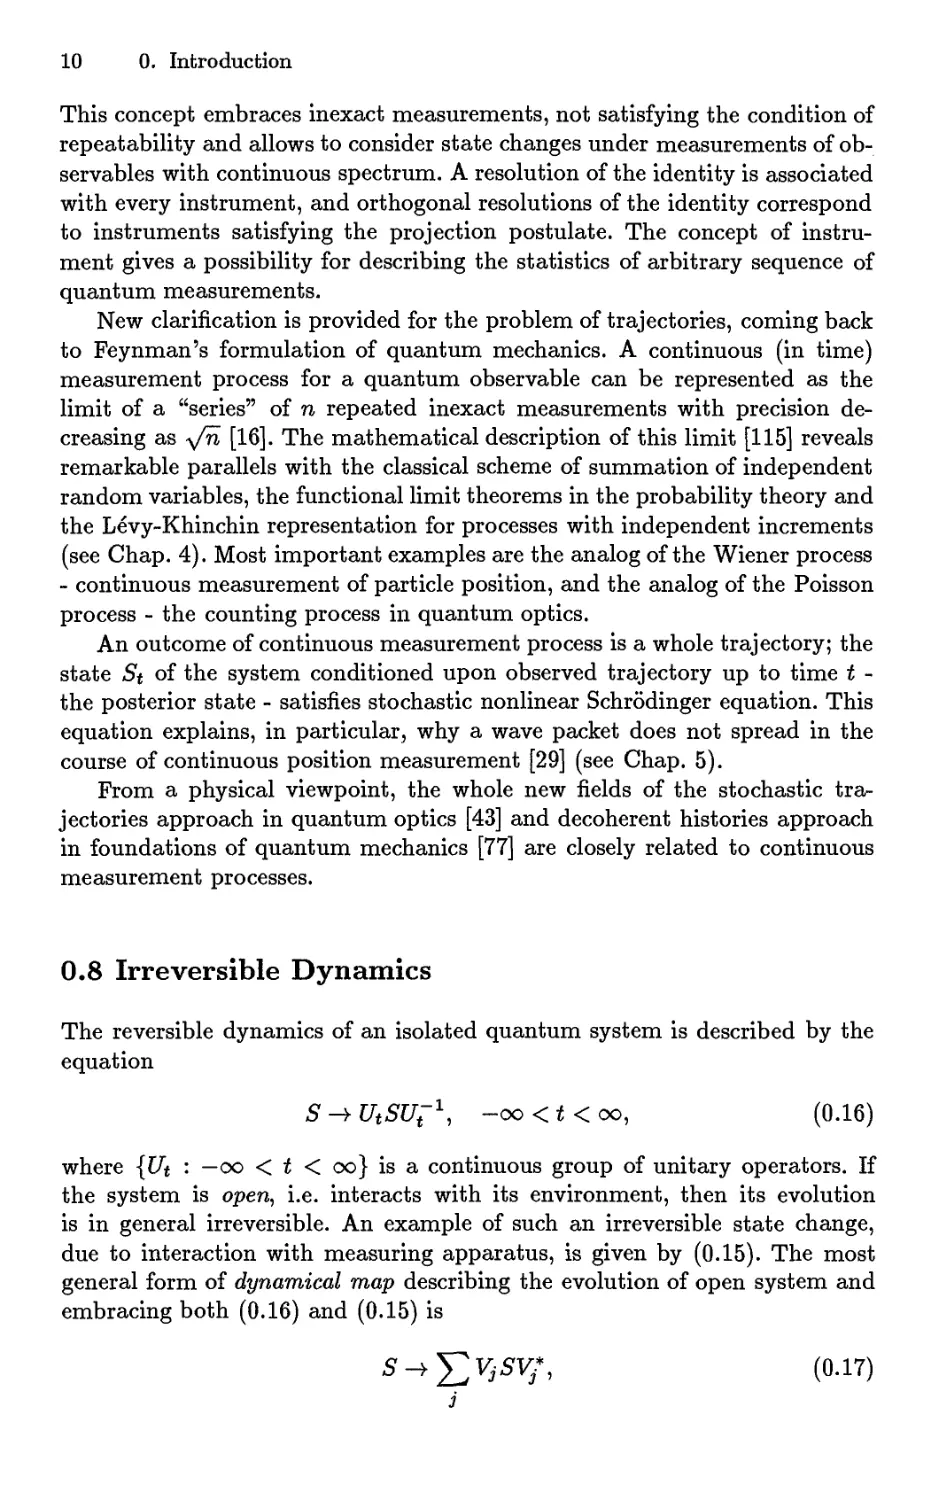 0.8 Irreversible Dynamics